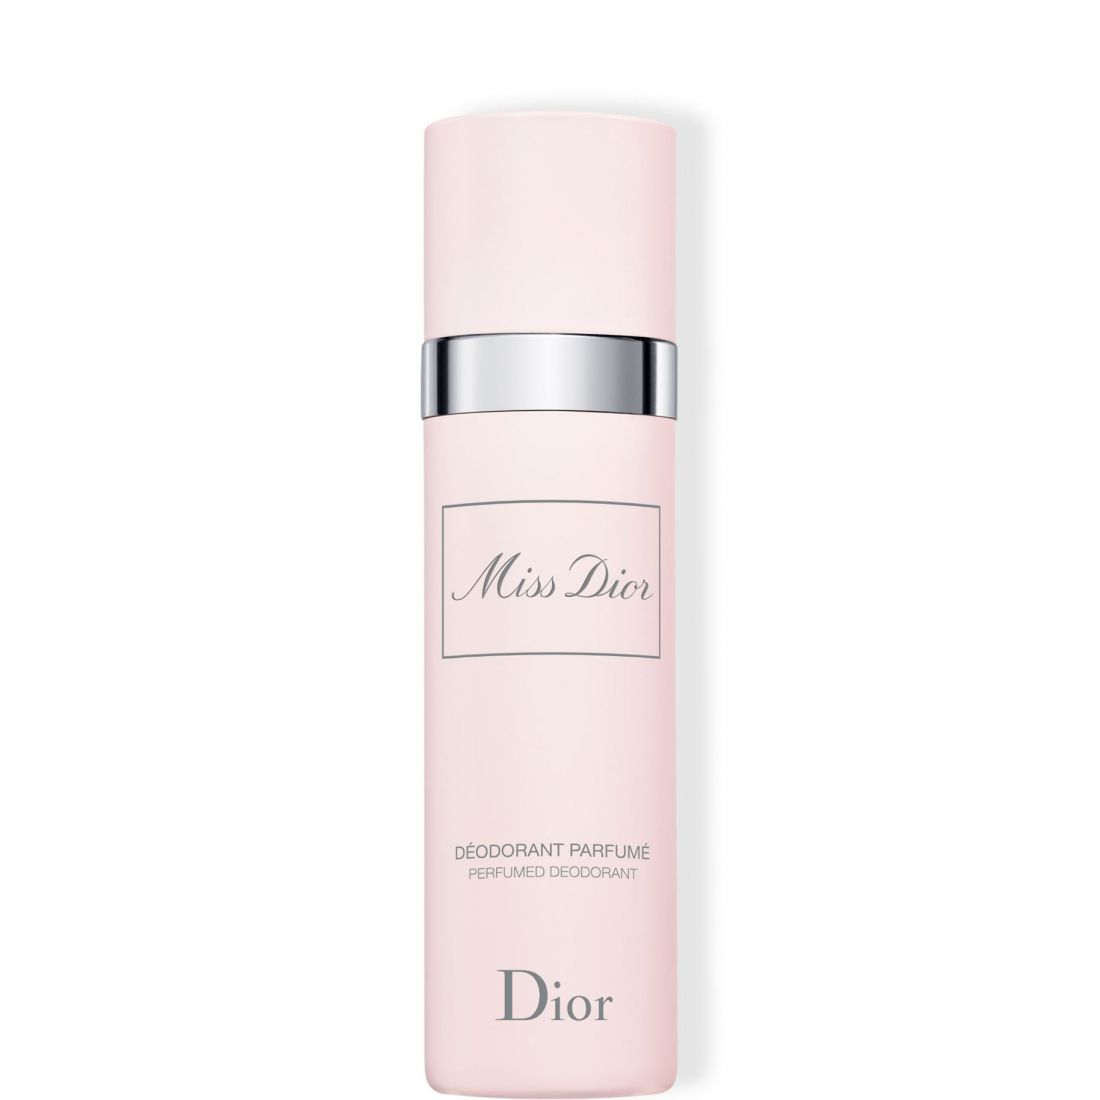 Dior - Déodorant parfumé 'Miss Dior' - 100 ml